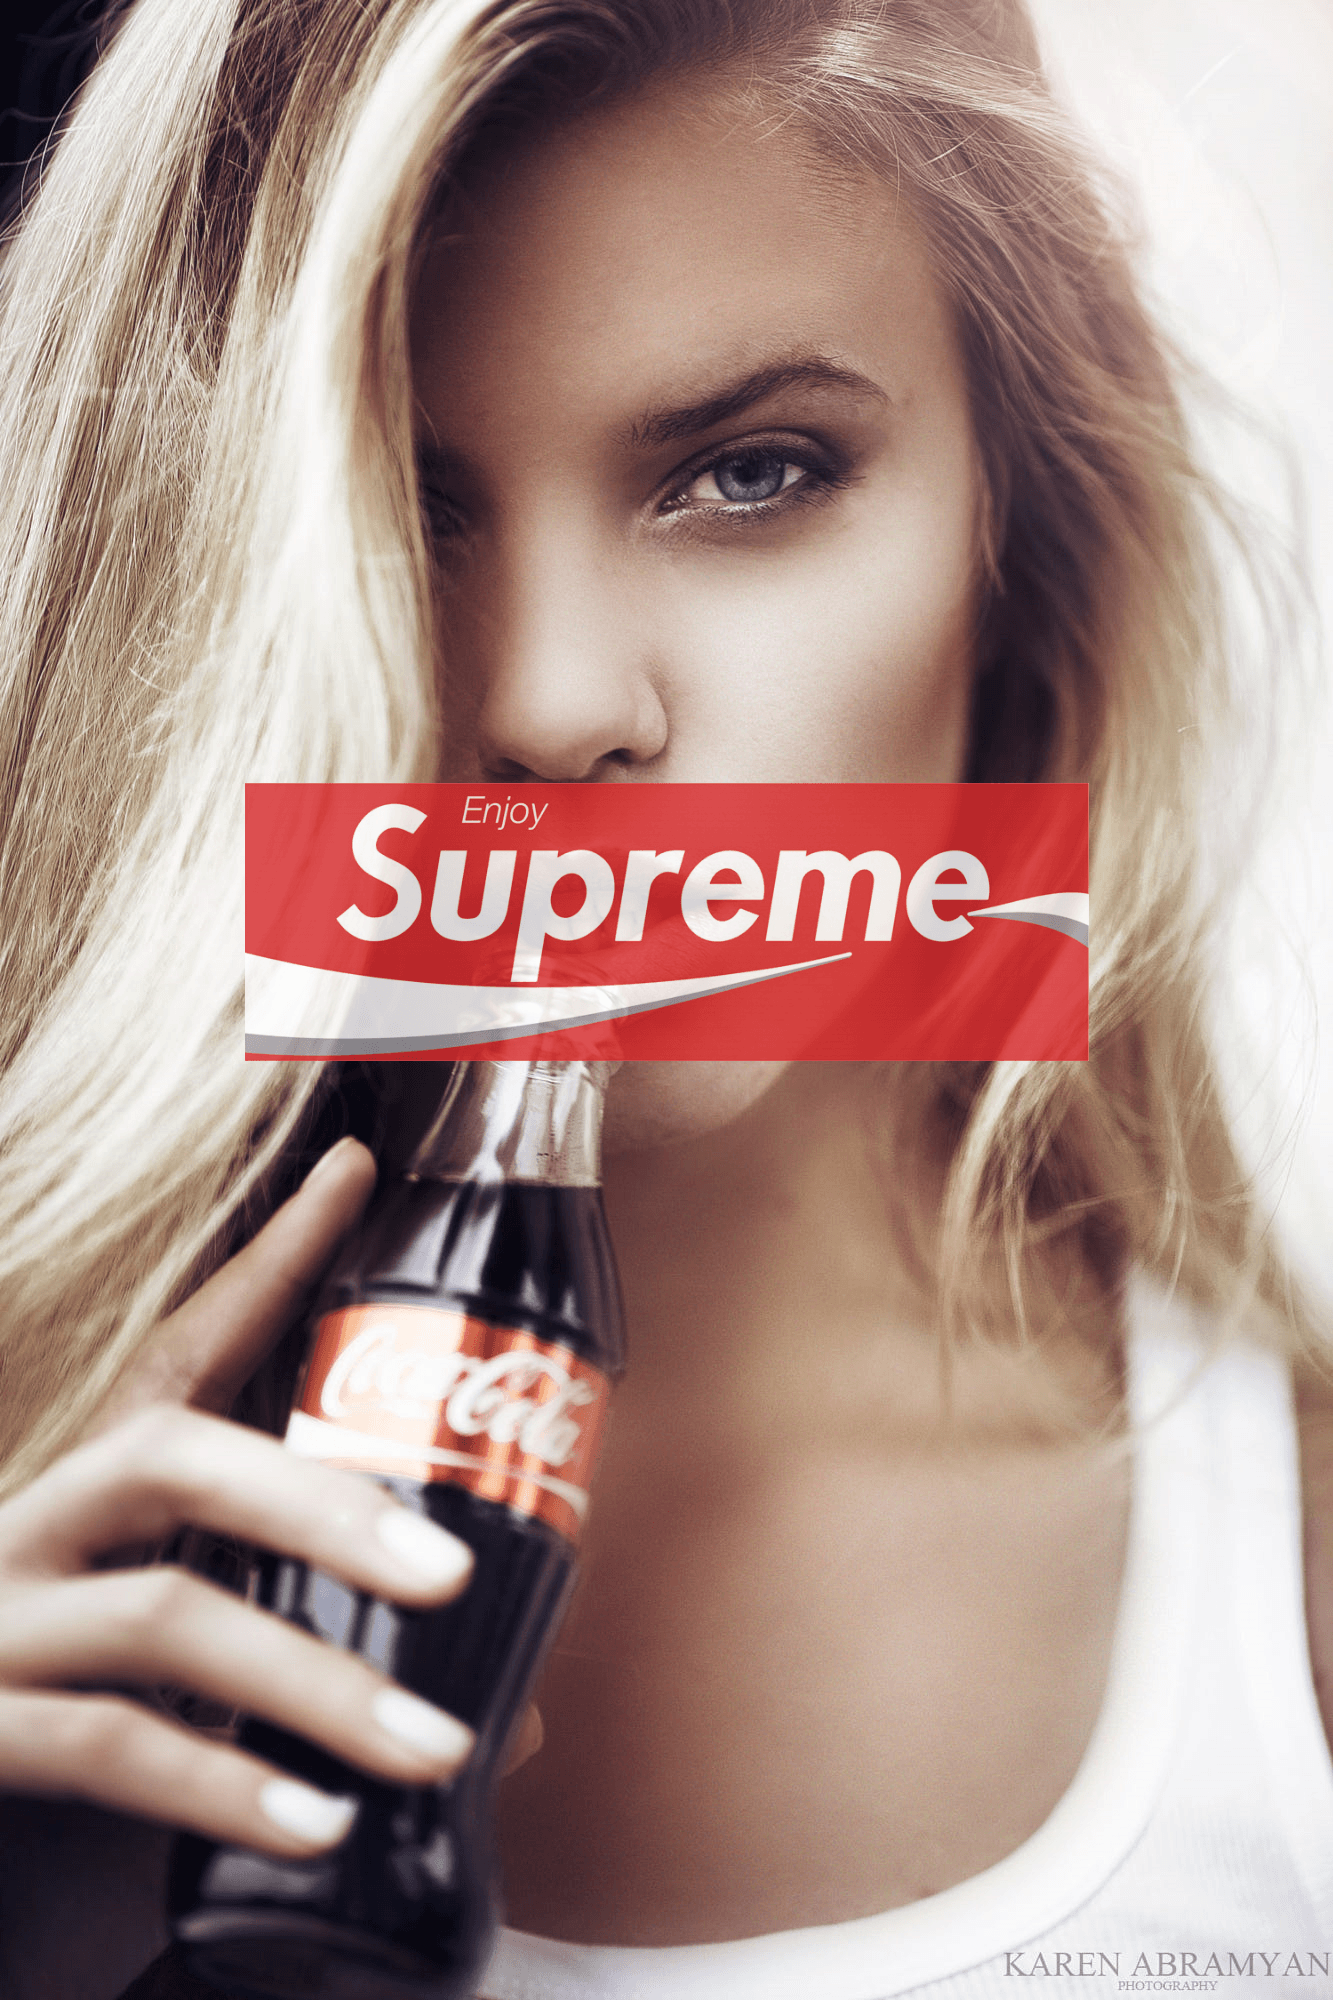 Supreme Coke Girl iPhone Wallpaper. Supreme wallpaper, Girl